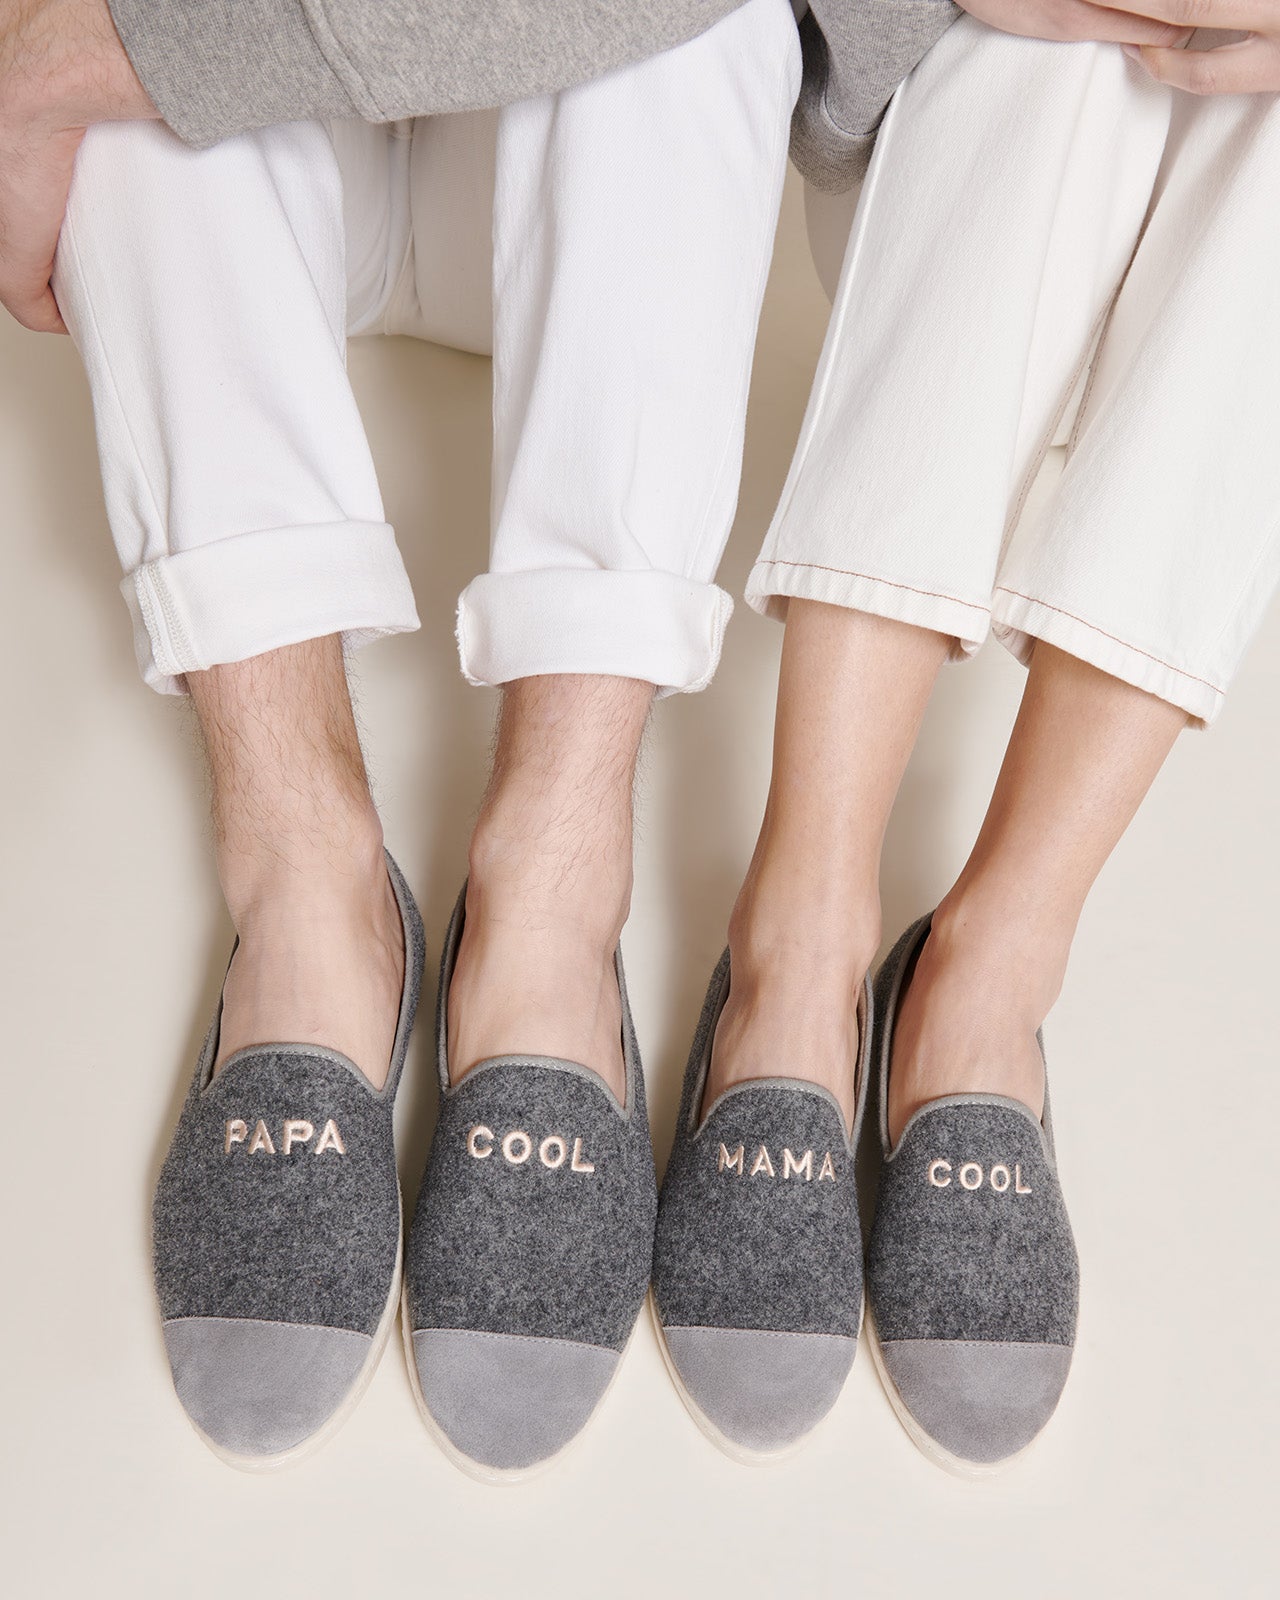 Le duo de chaussons Mama Cool x Papa Cool gris – émoi émoi